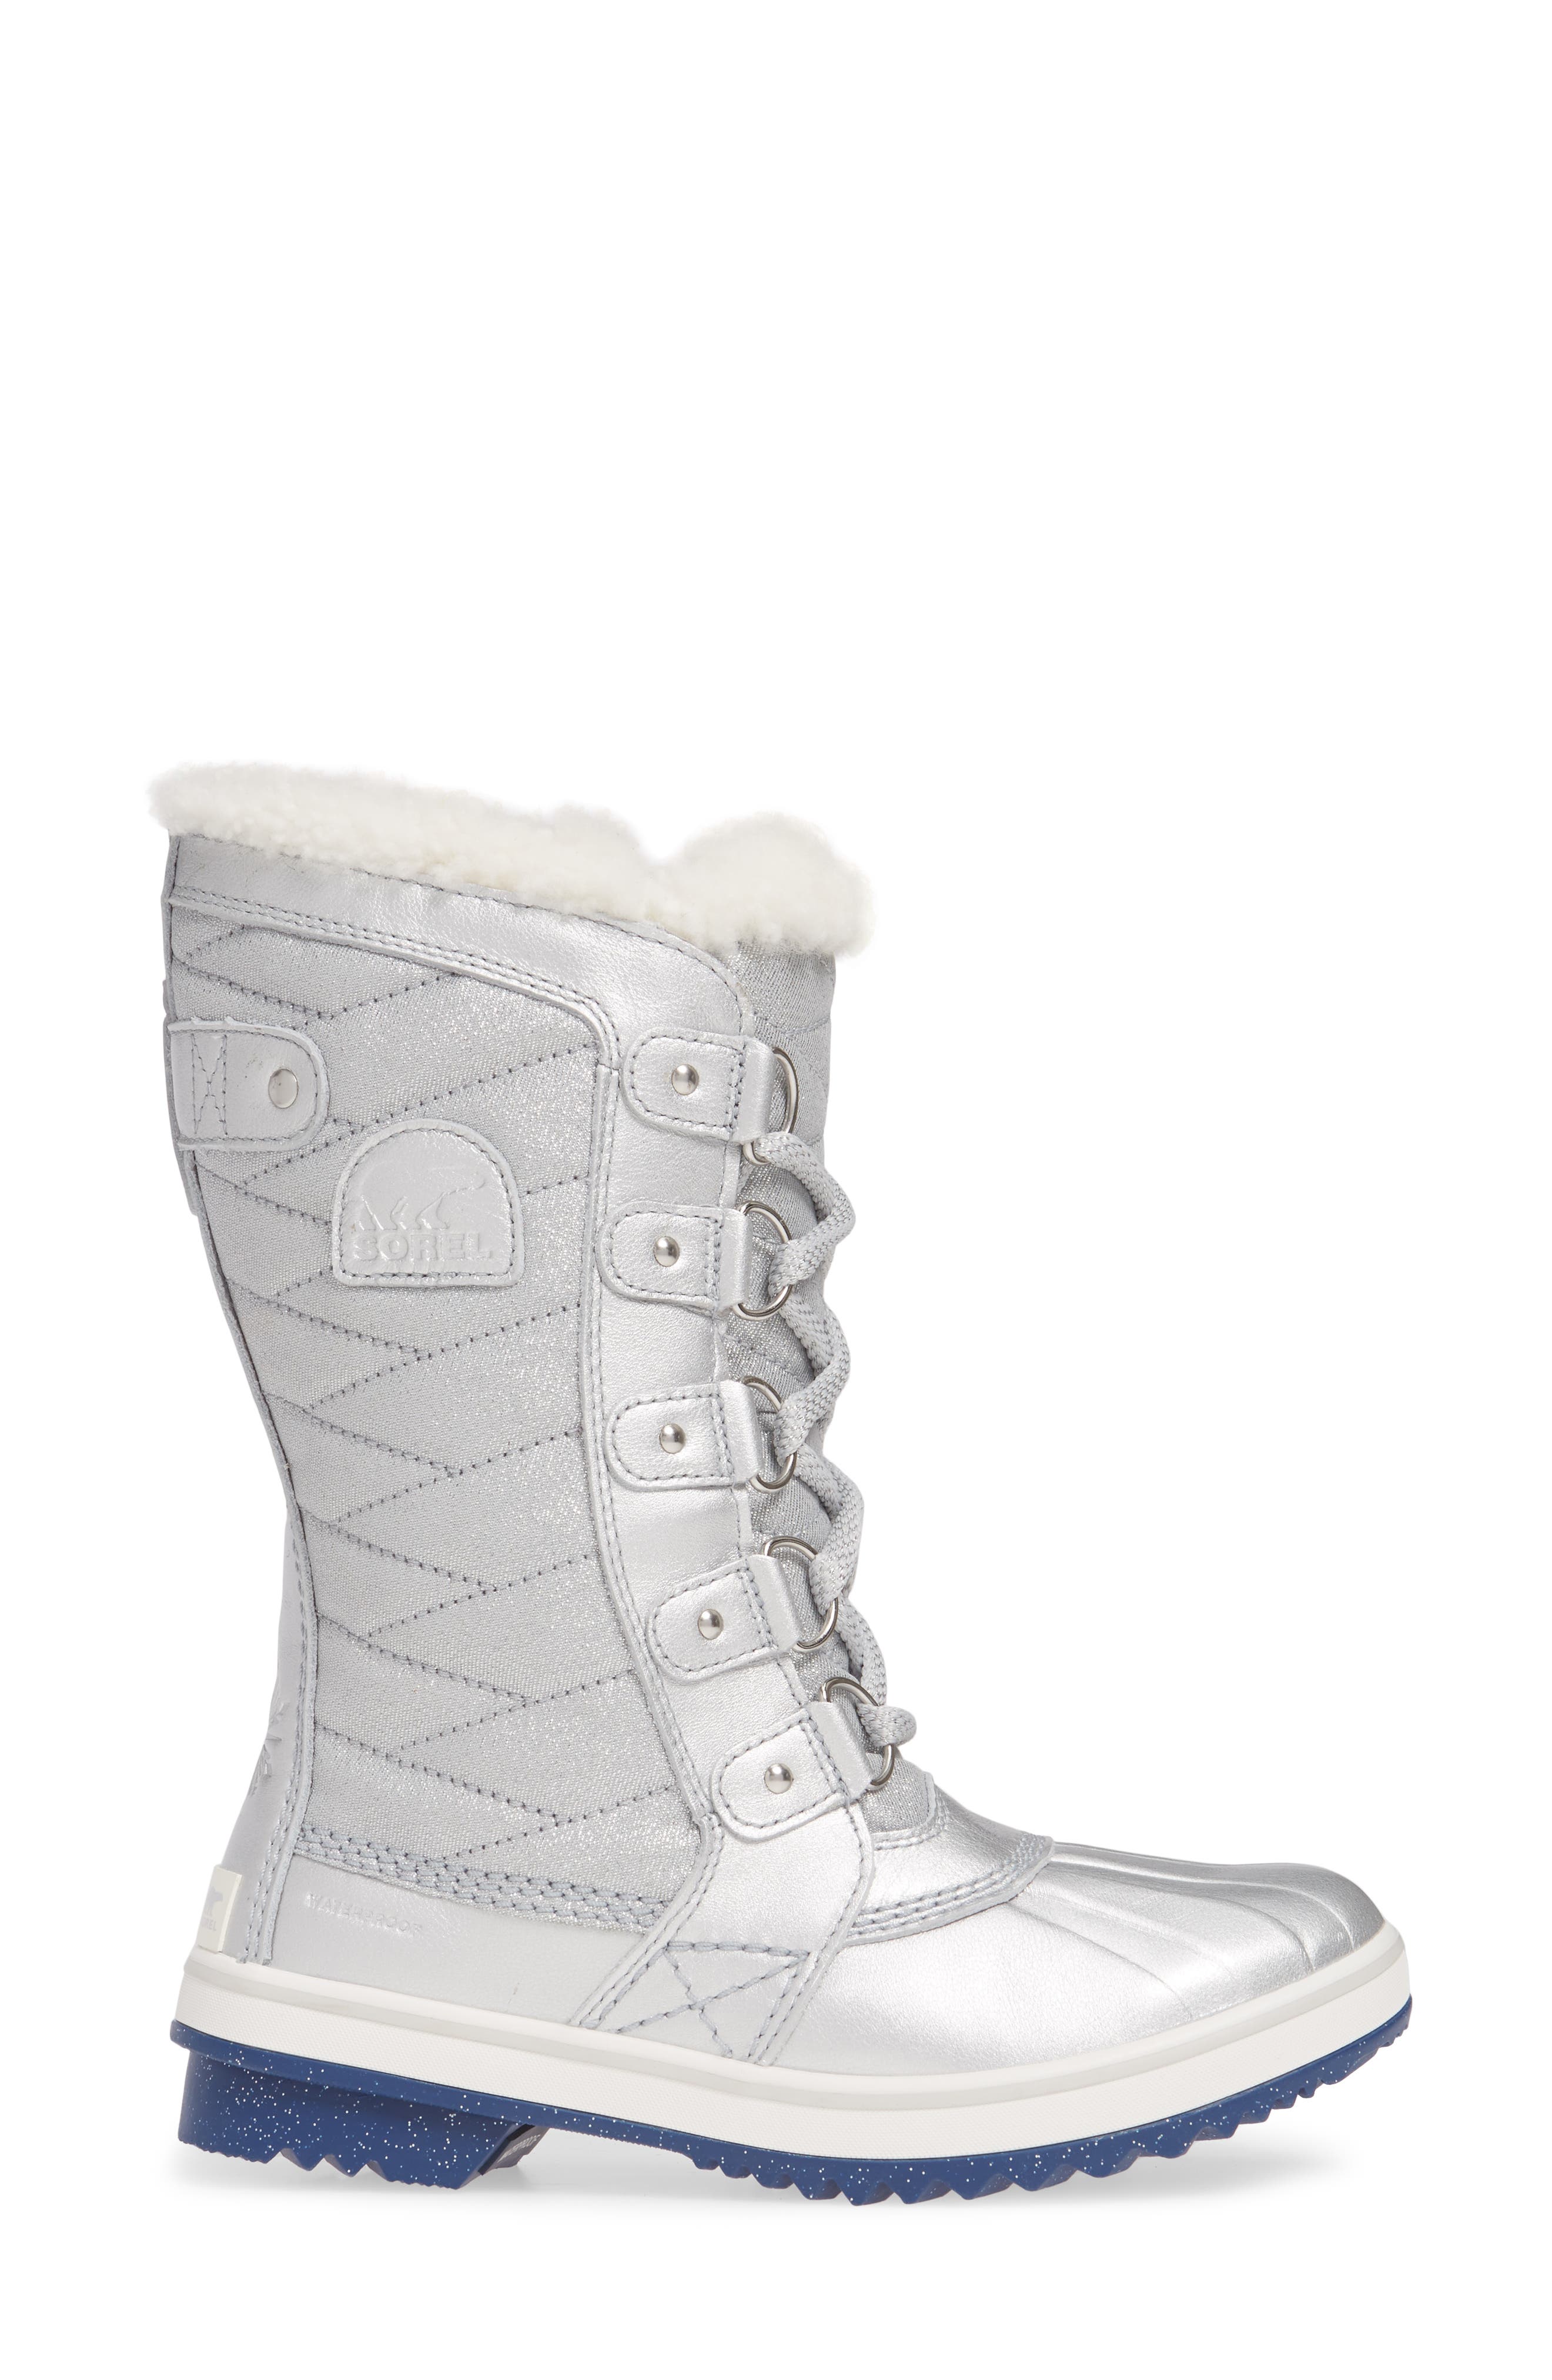 sorel wide width snow boots